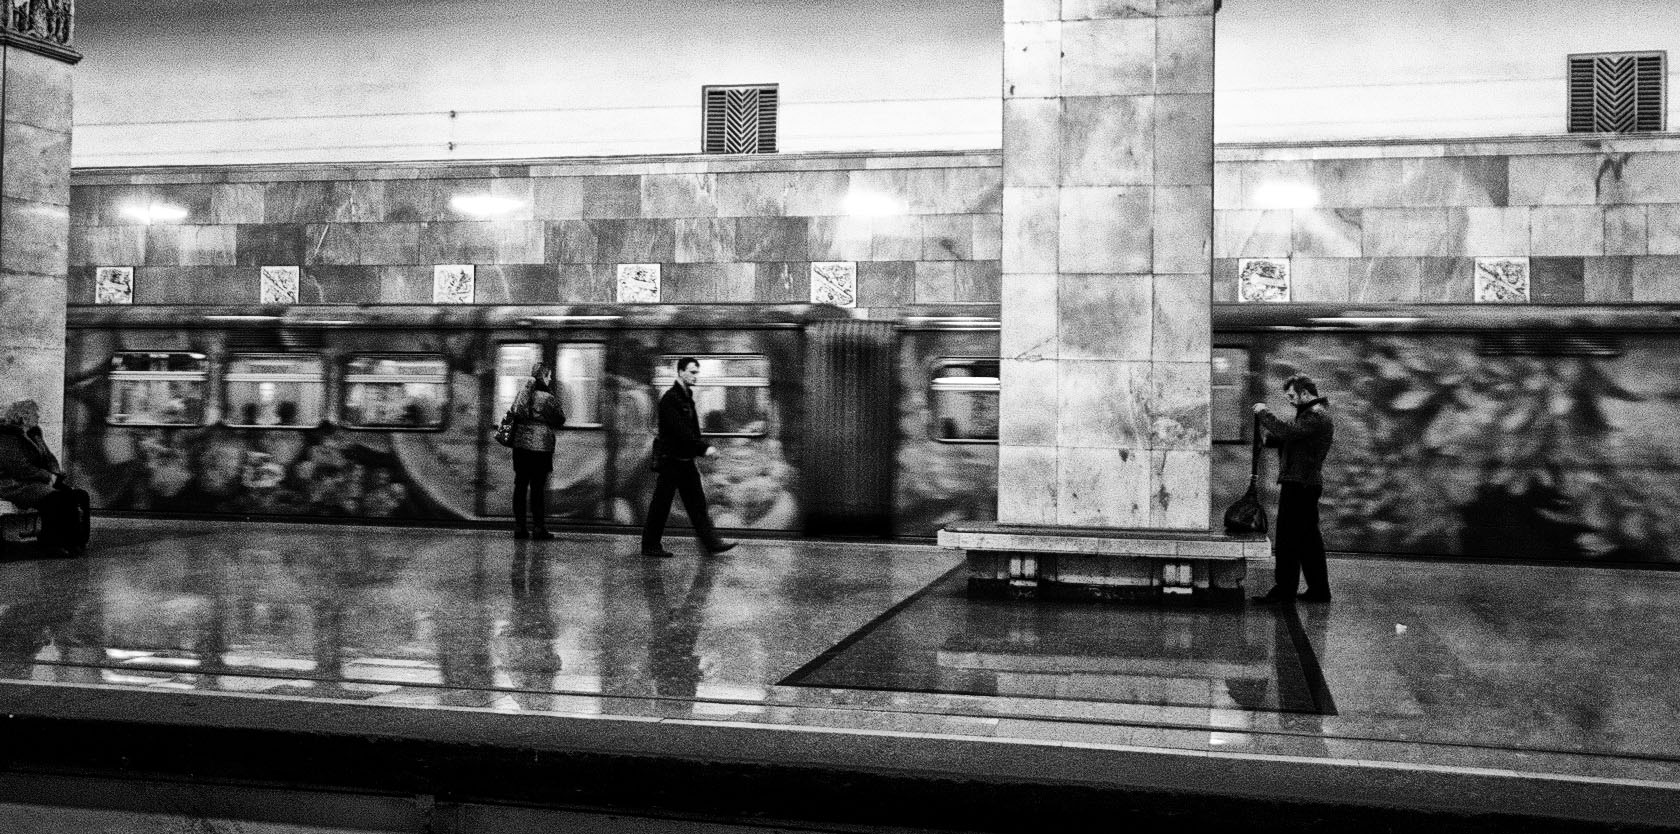 Moskauer U-Bahn-Station